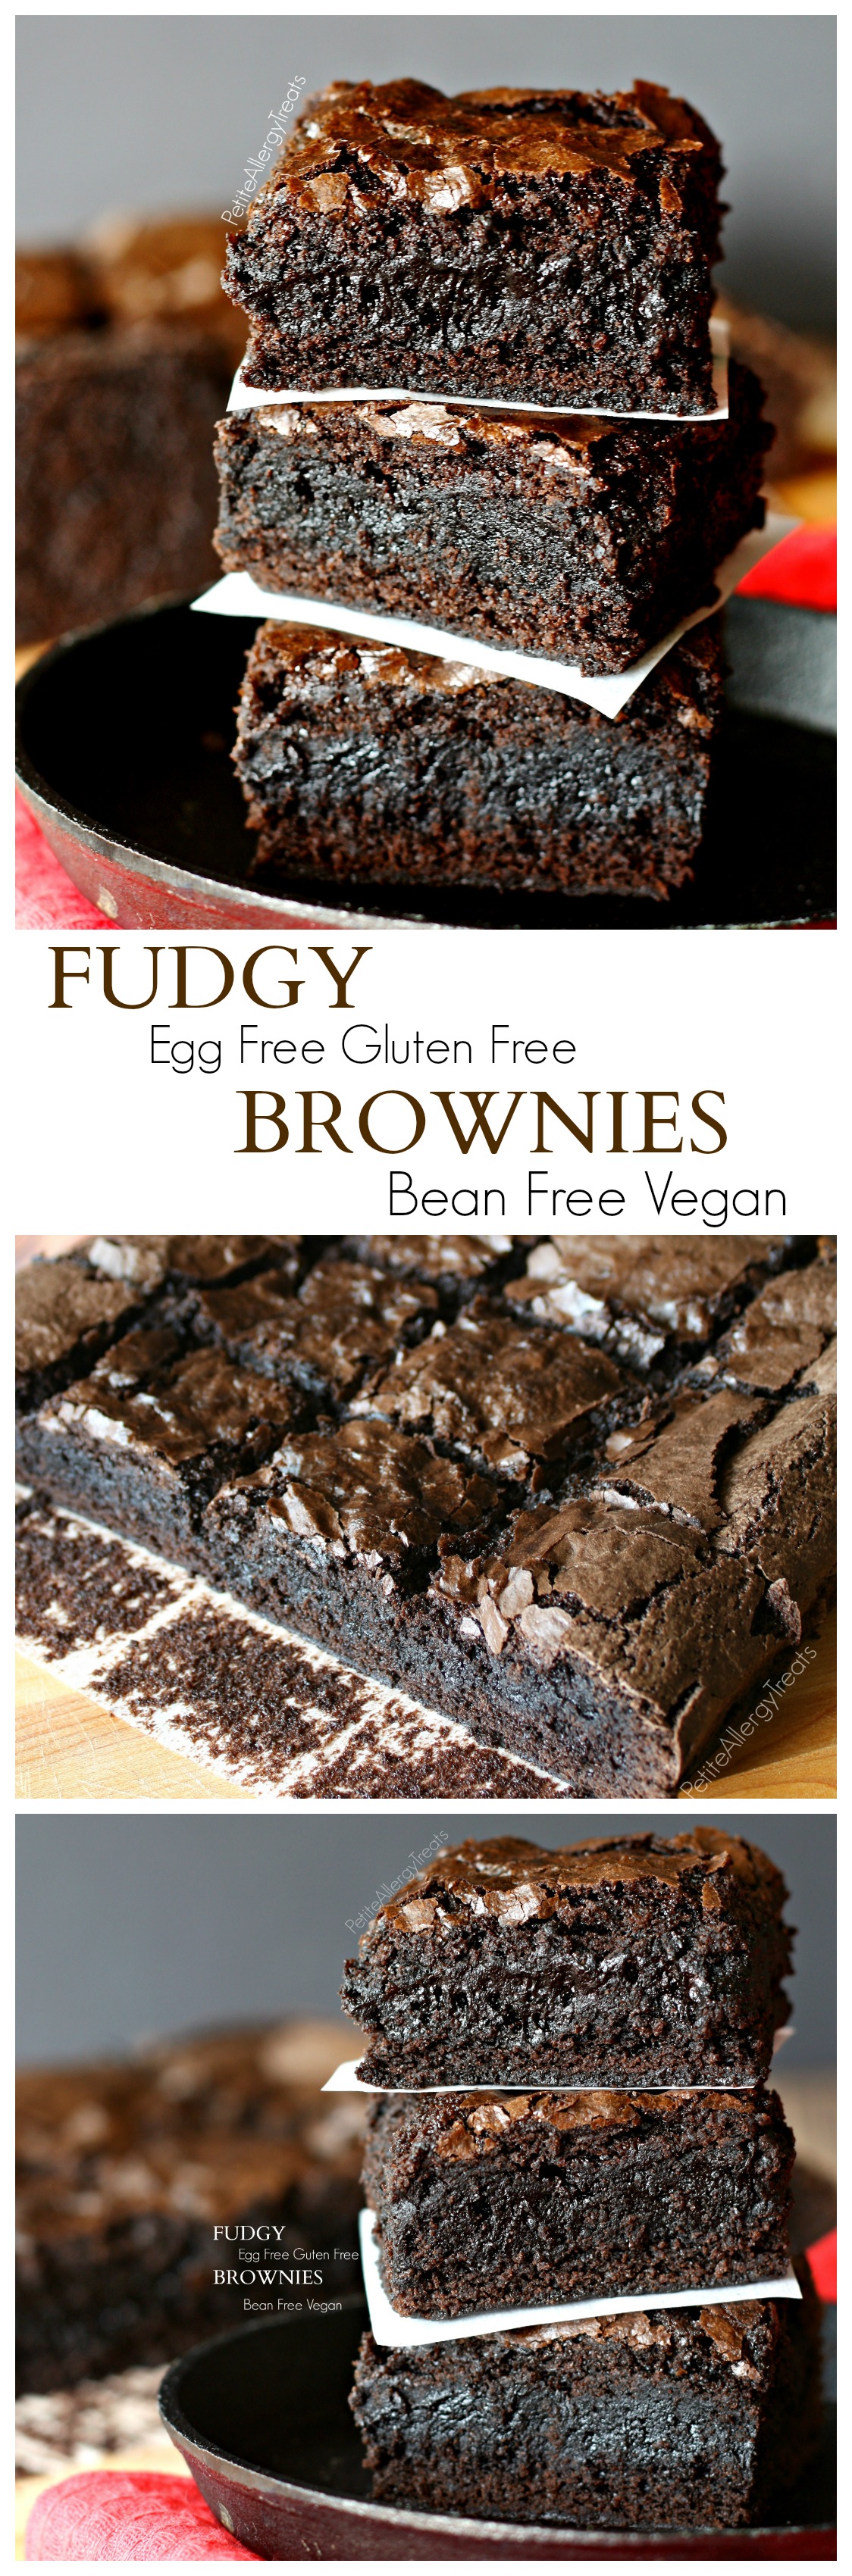 Gluten Free Egg Free Brownies Fudgy (Vegan Bean Free)- Decadent eggless brownie that is super fudgy! PetiteAllergyTreats